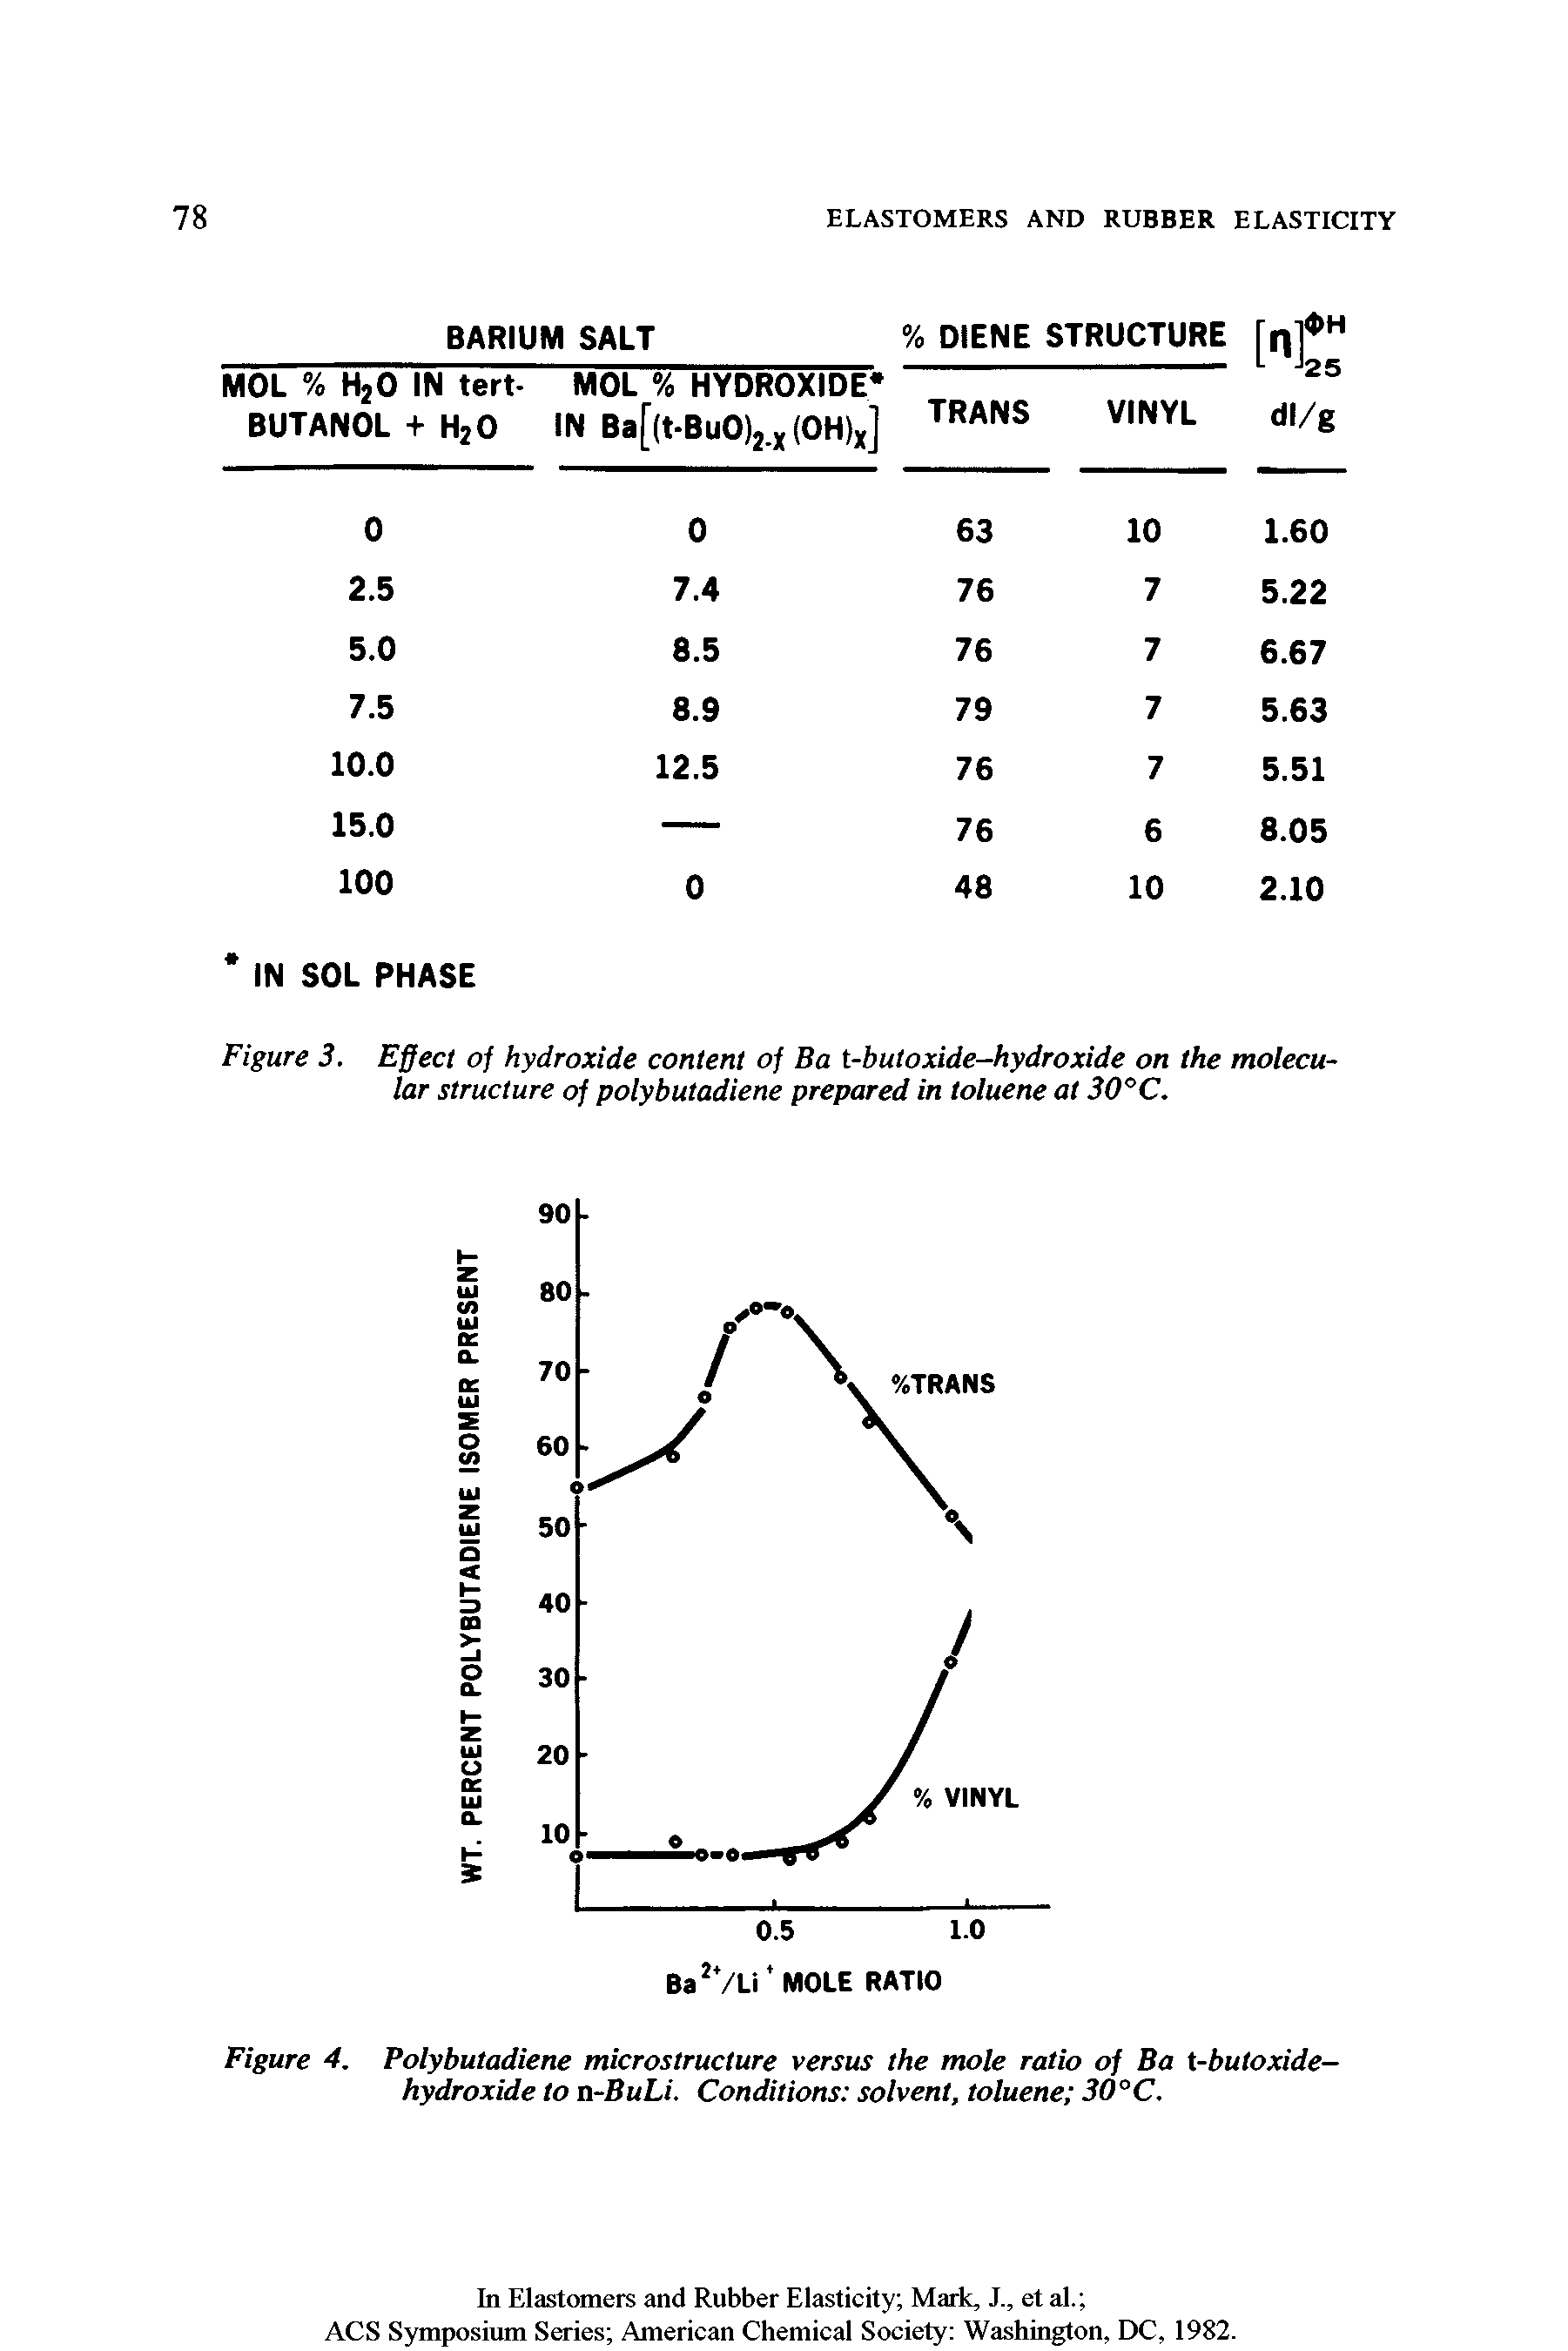 Figure 4. Polybutadiene microstructure versus the mole ratio of Ba t-butoxide-hydroxide to n-BuLi. Conditions solvent, toluene 30°C.